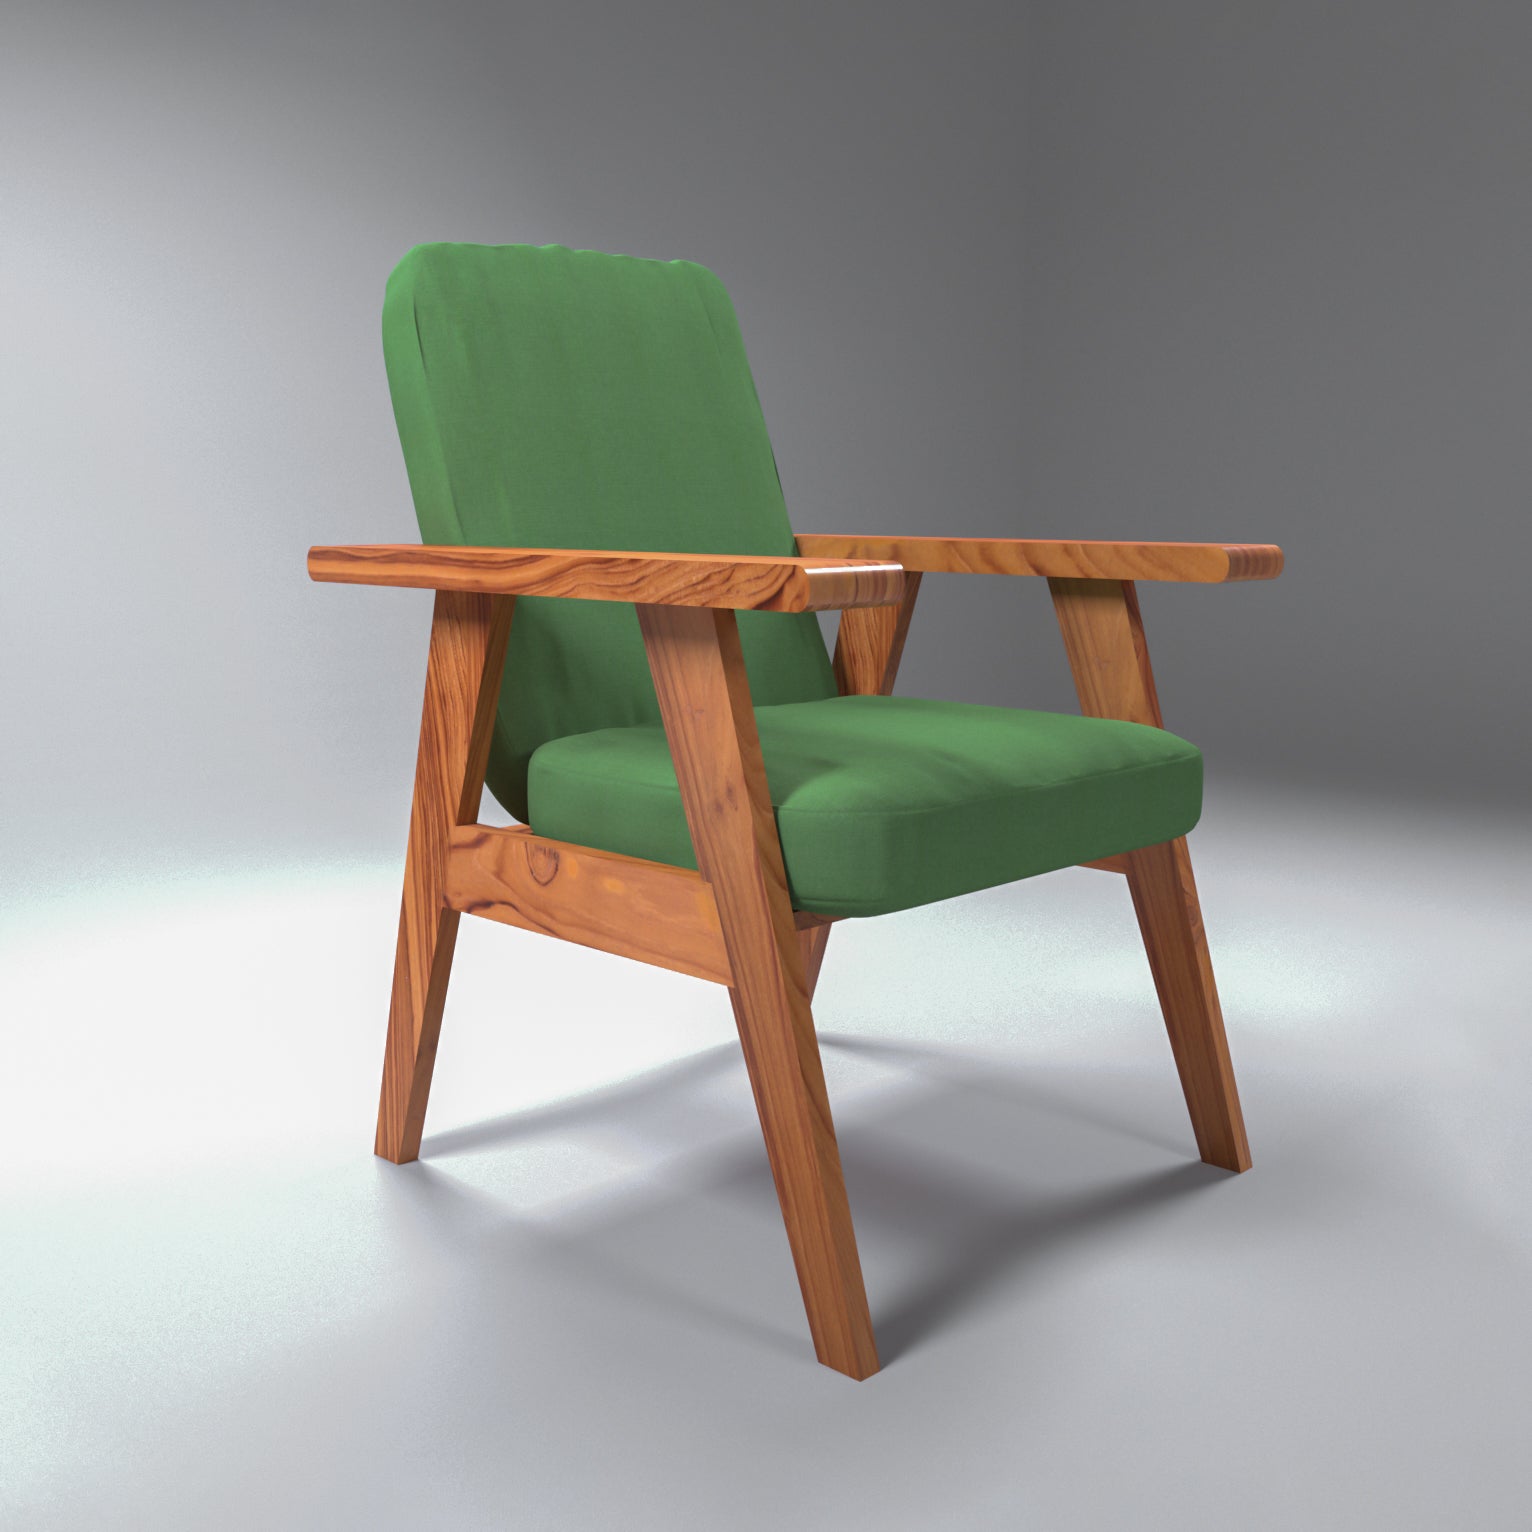 Green Upholstered Natural teak polish arm chair Arm Chair